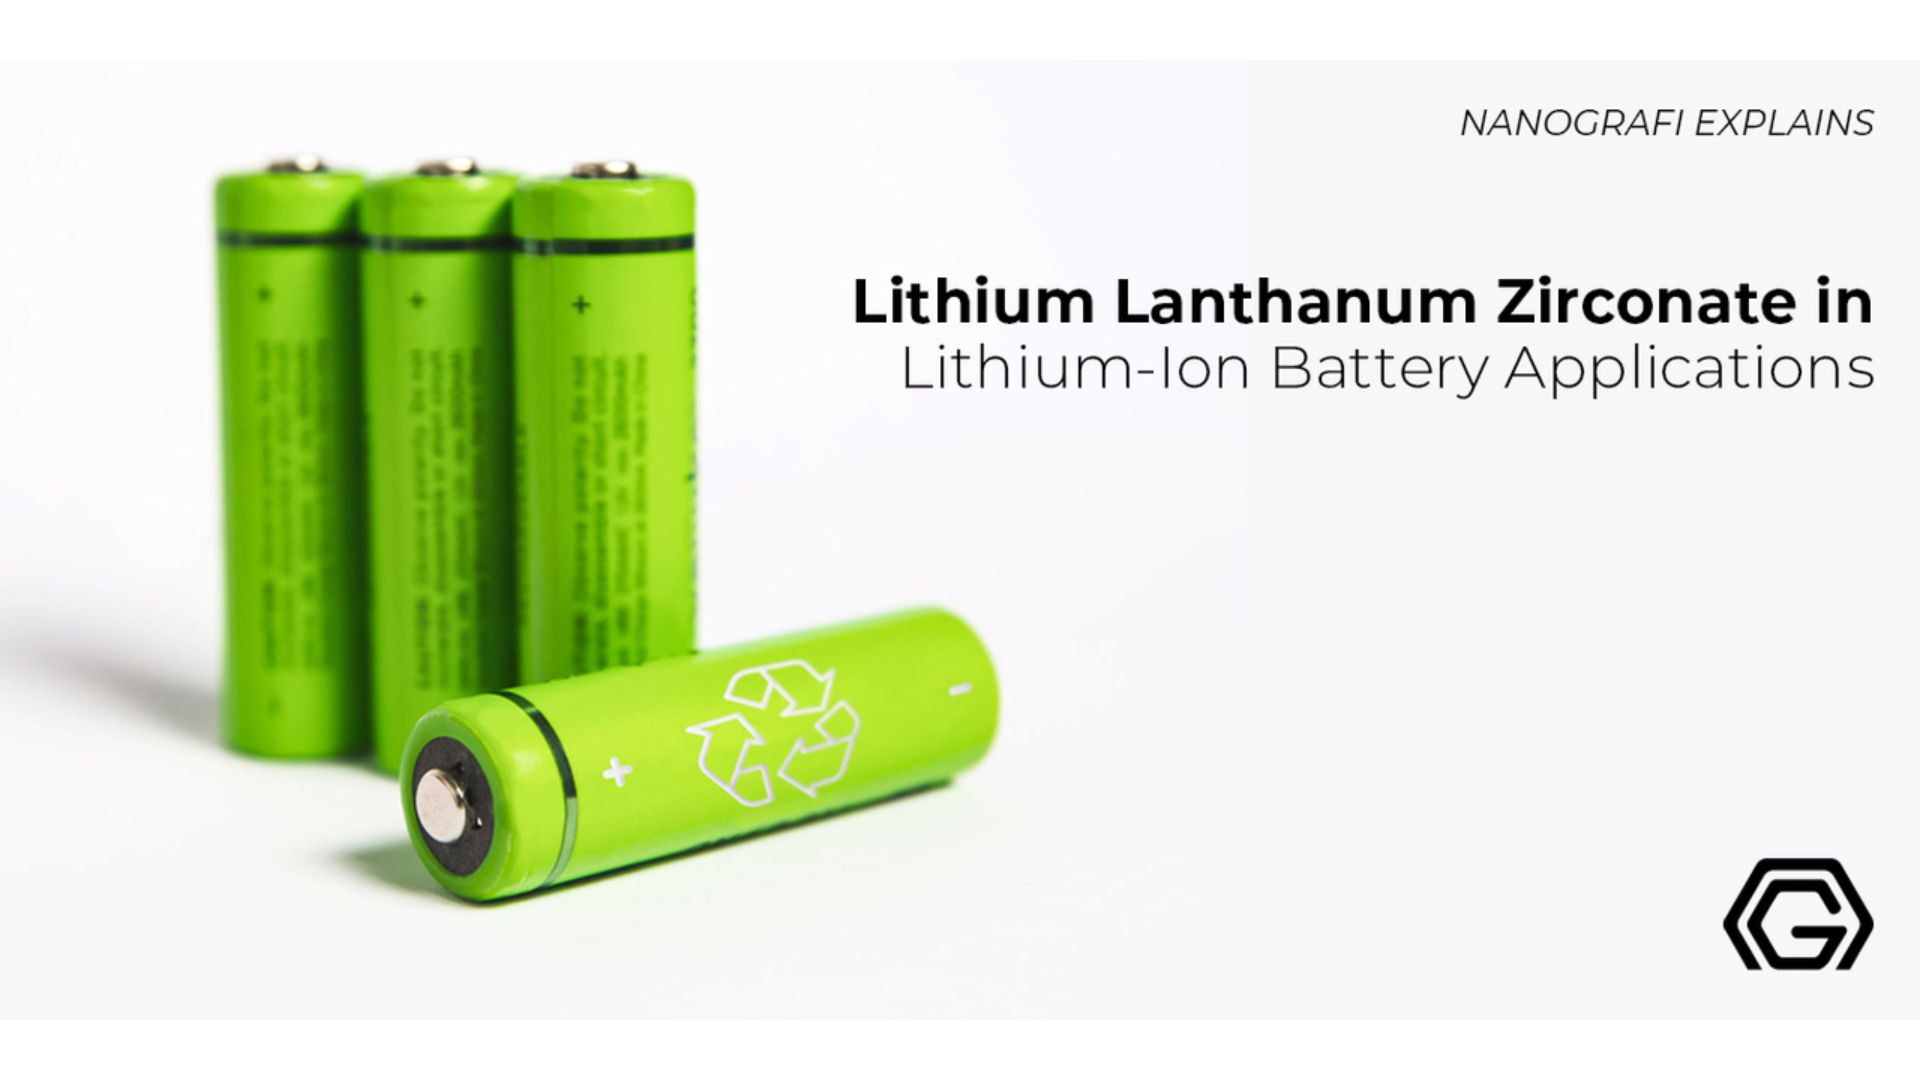 Lithium lanthanum zirconate in li-ion battery applications